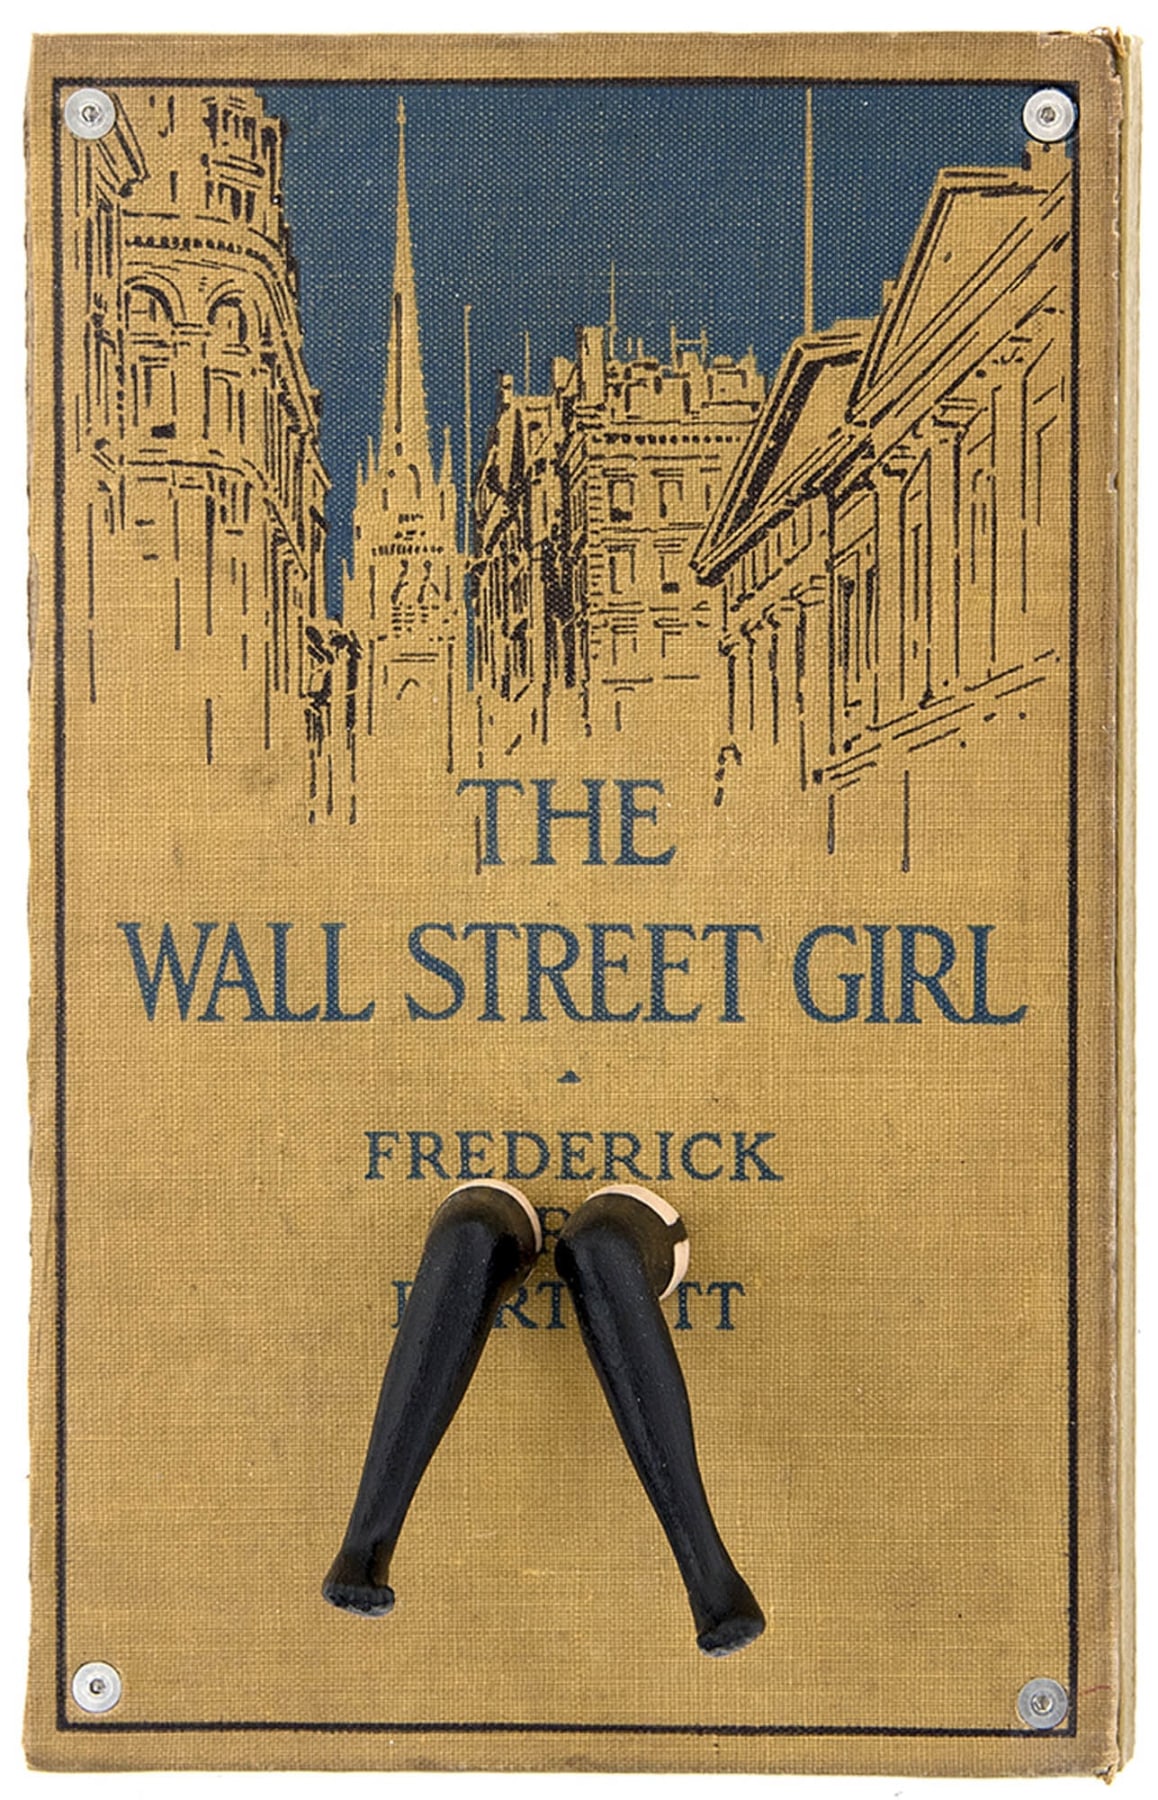 Nancy Gifford, The Wall Street Girl - #metoo Series, 2017